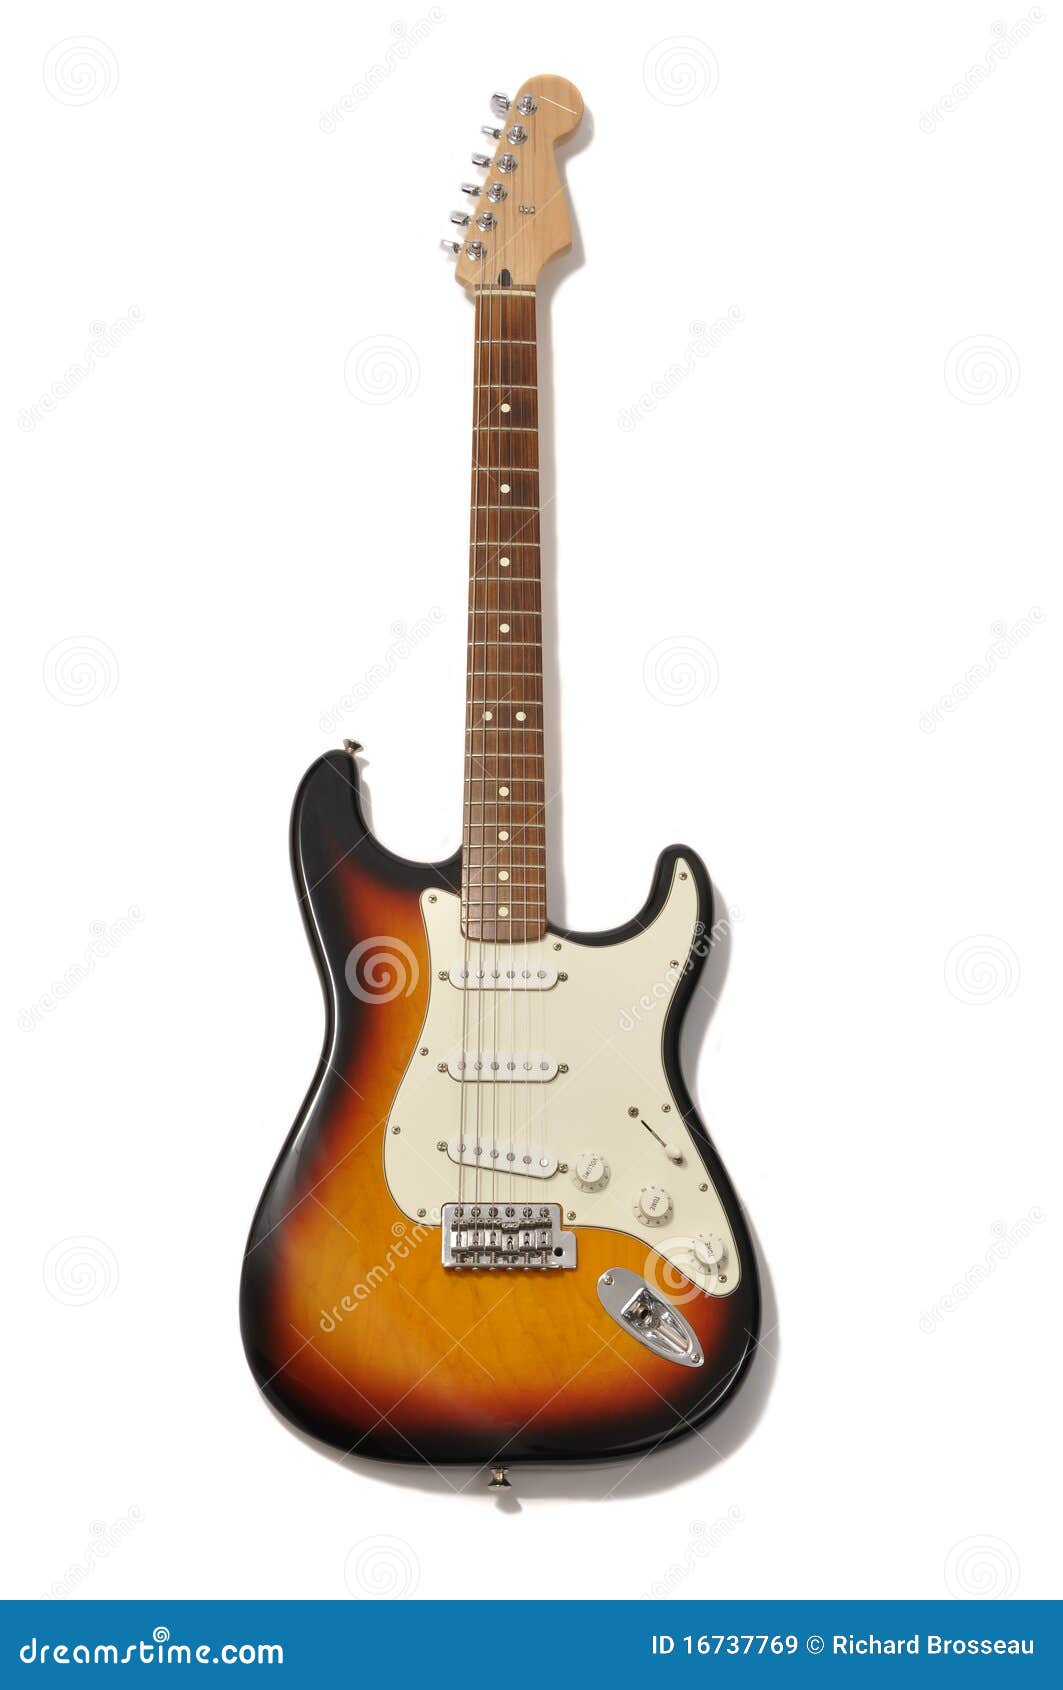 electric sunburst guitar 